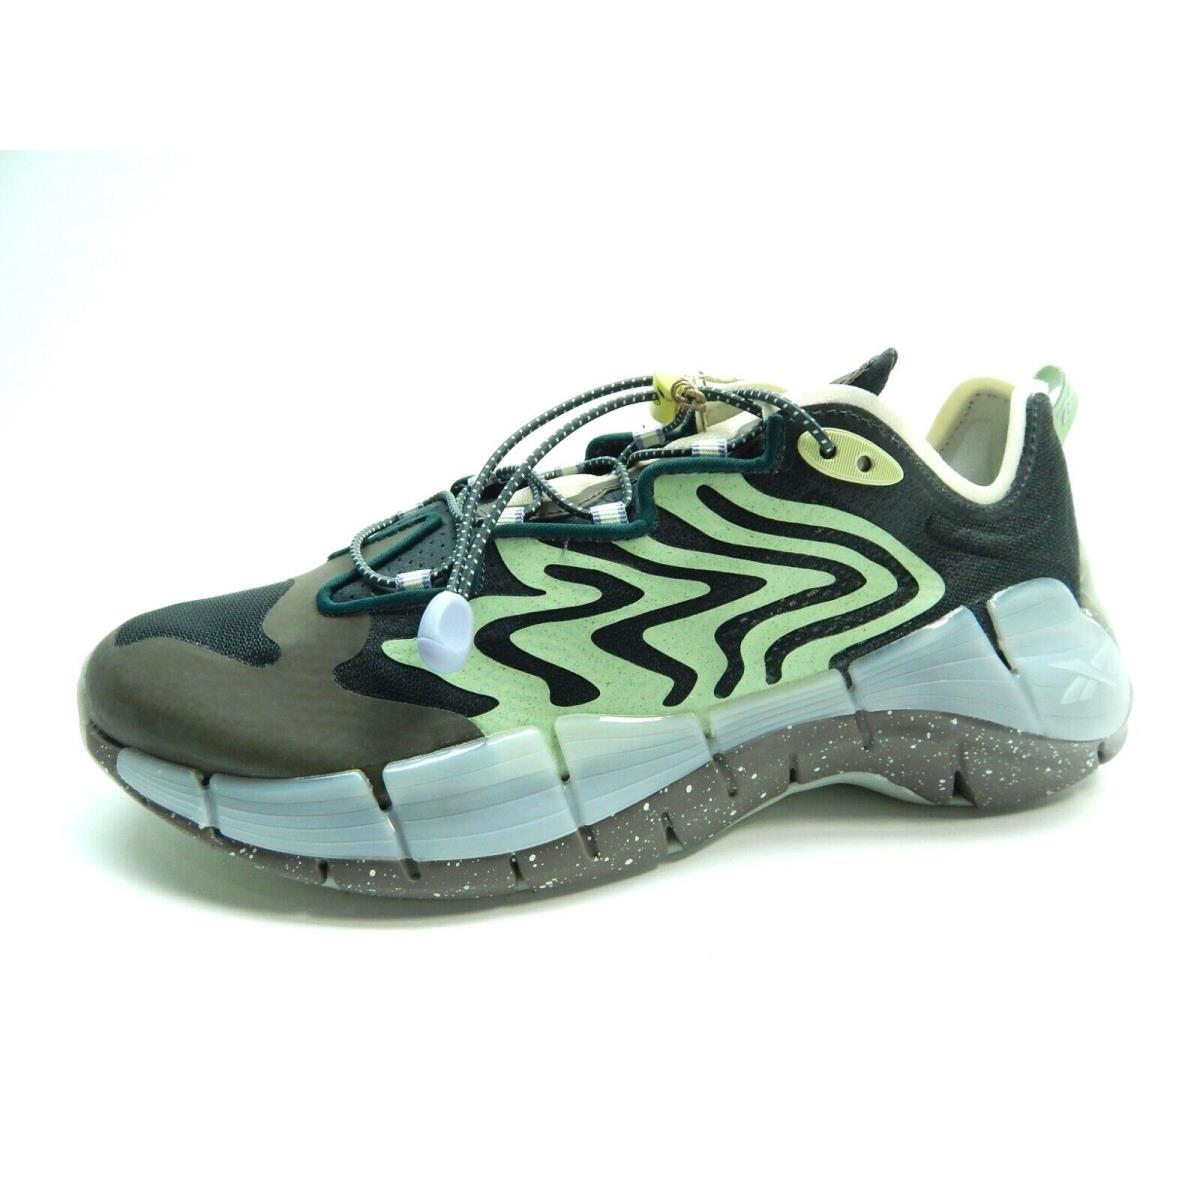 Reebok Zig Kinetica II Running S23890 Men Shoes Size 9